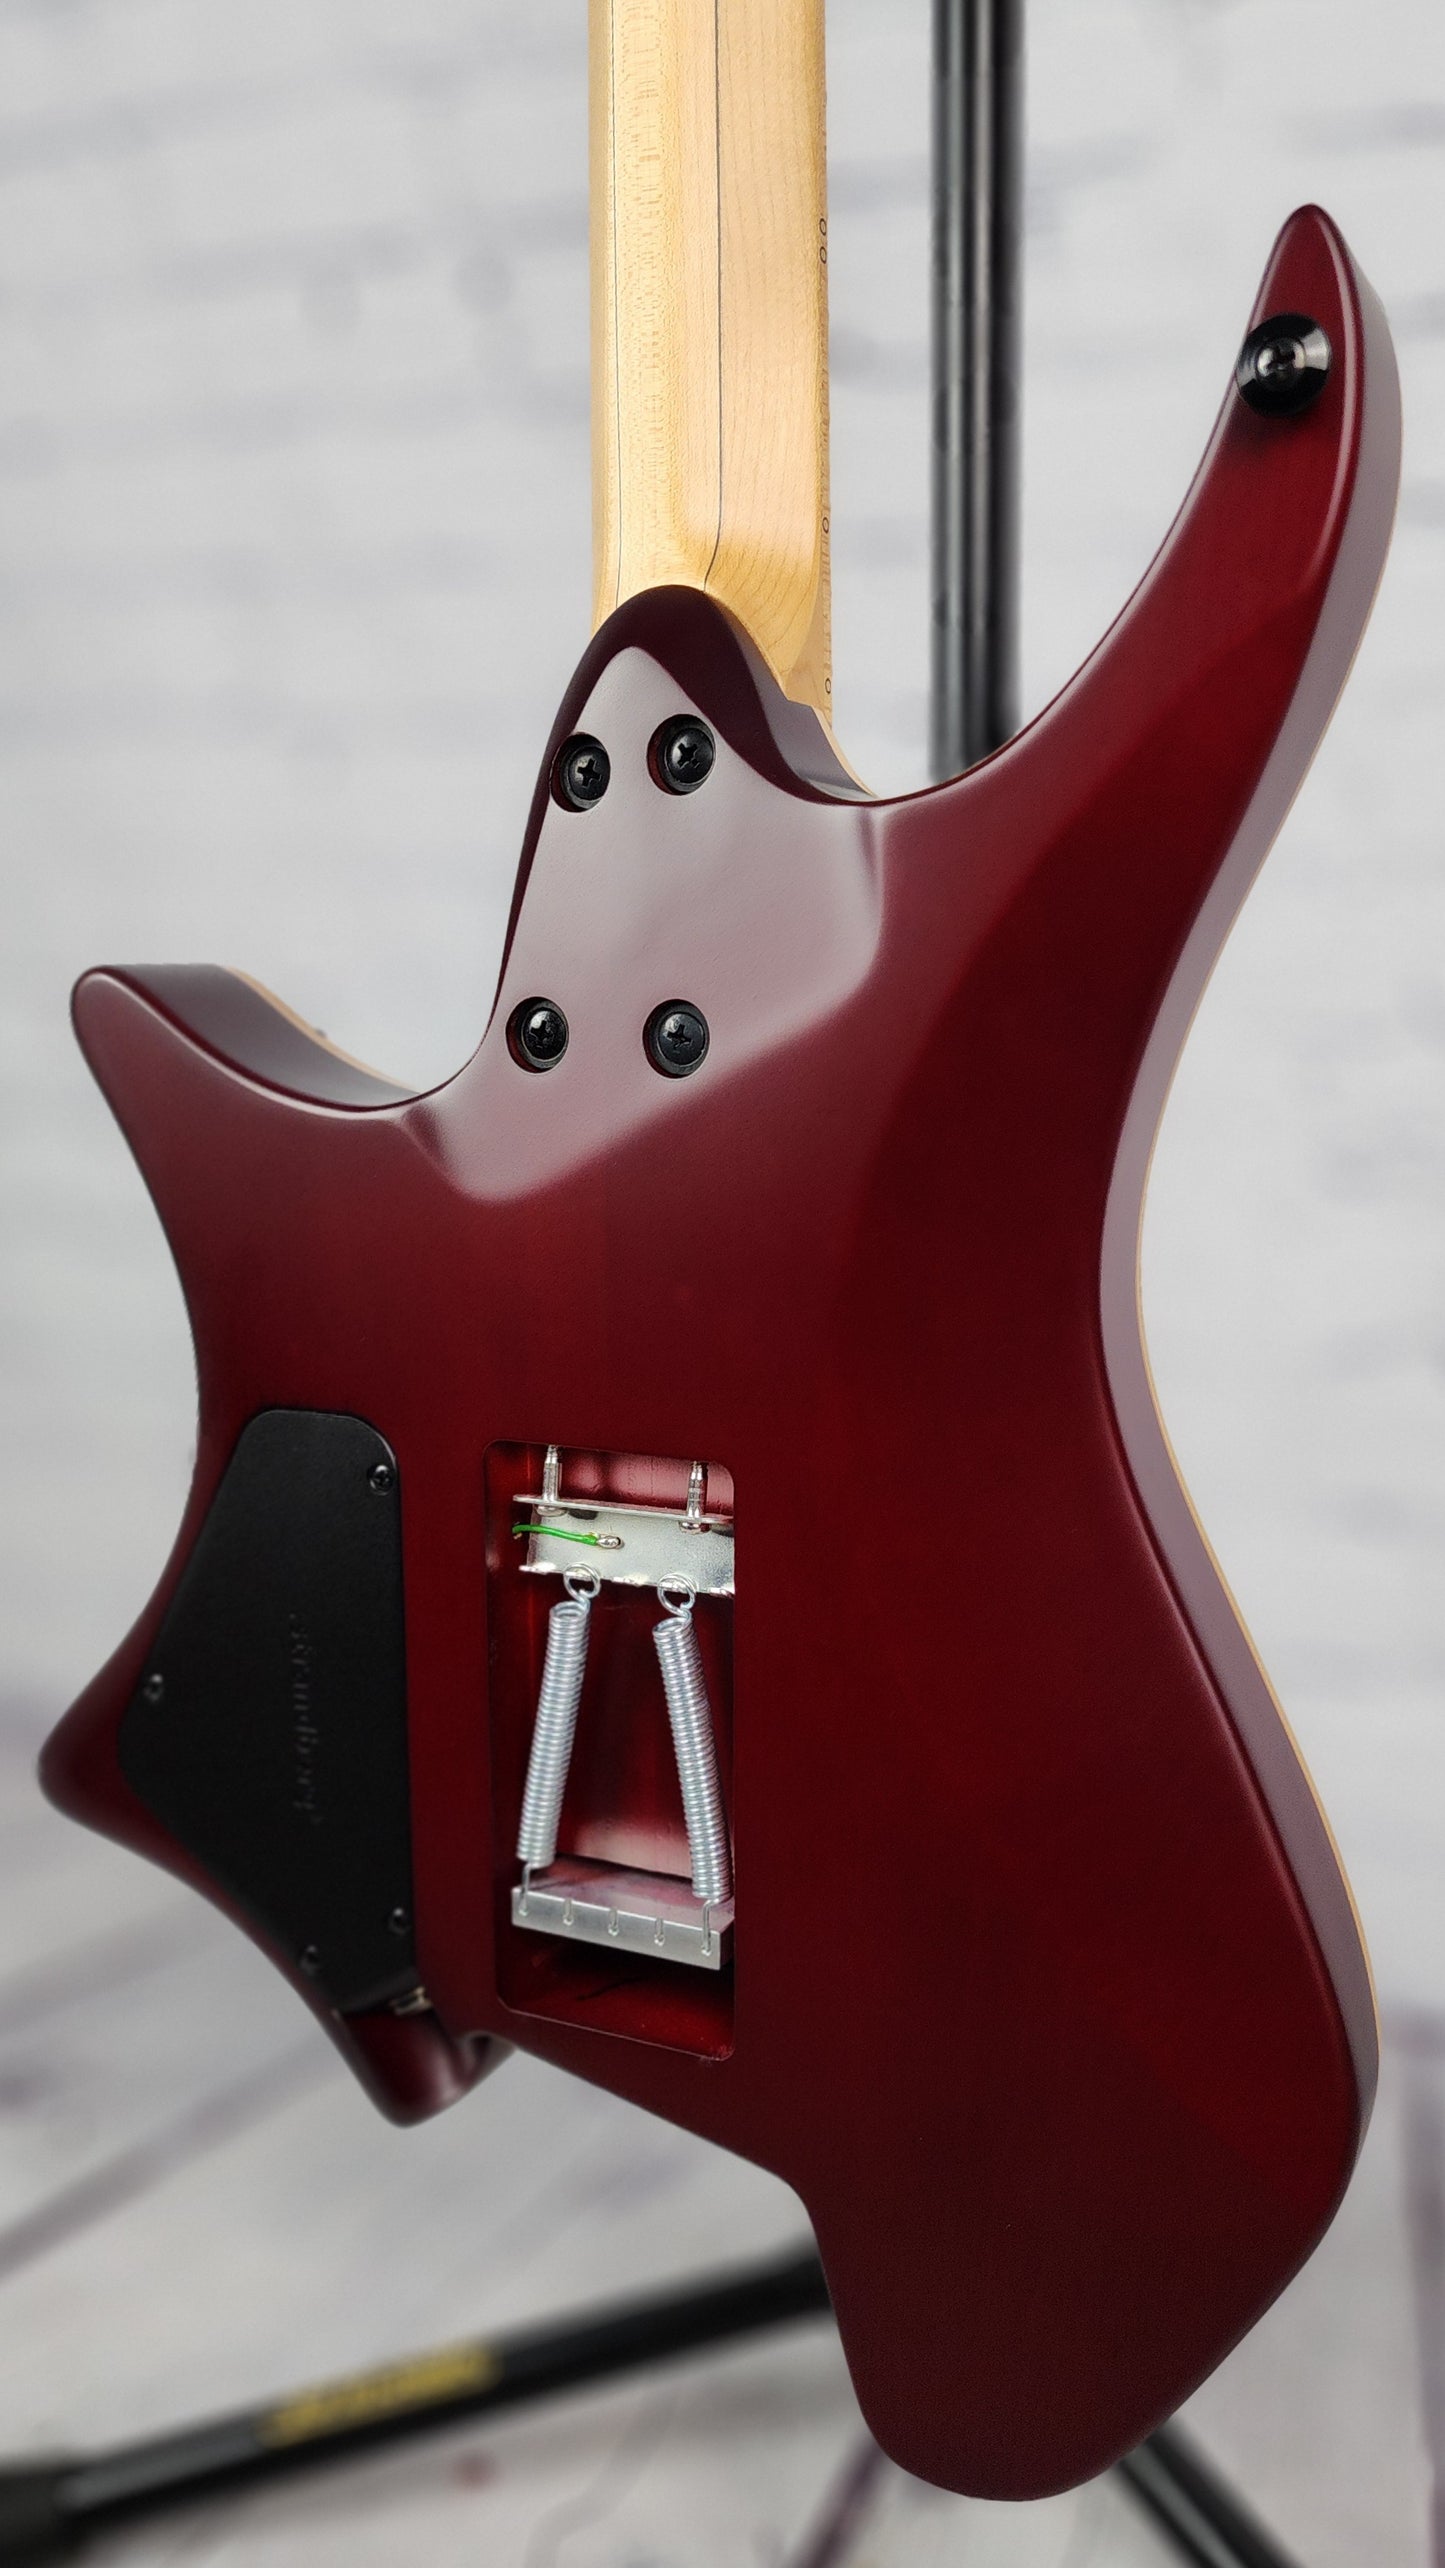 Strandberg Boden Standard NX 6 String Tremolo HSS Electric Guitar Trans Red